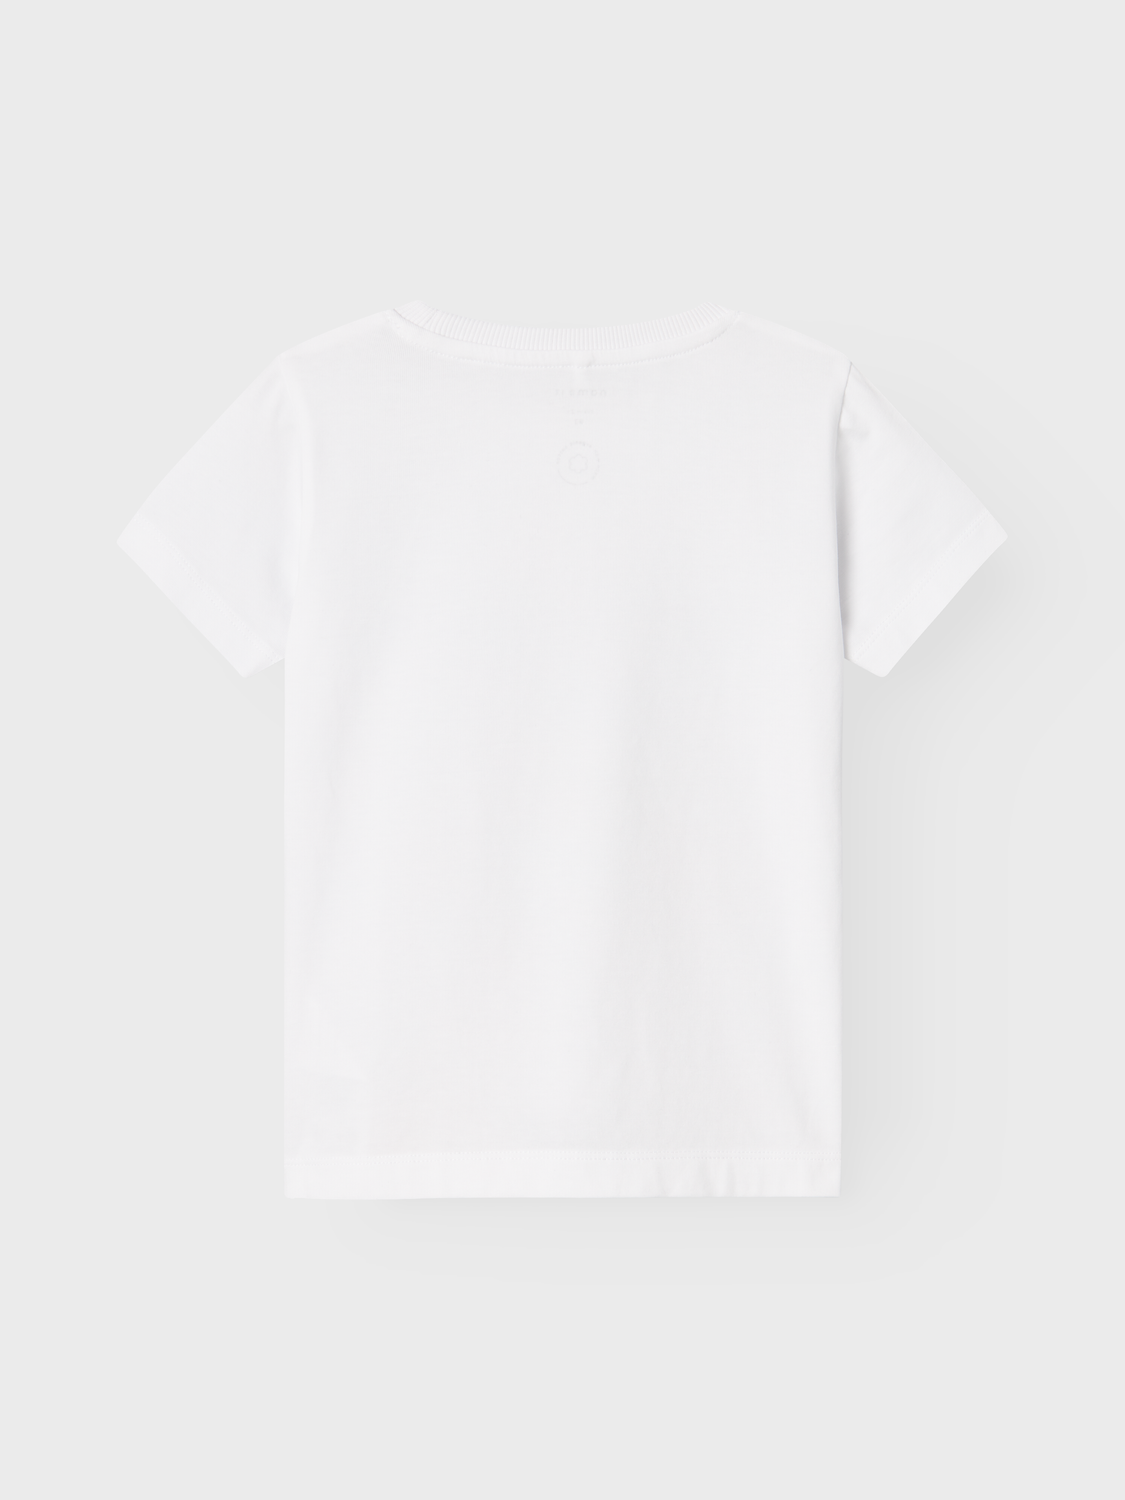 NMMHOLGER T-Shirts & Tops - Bright White